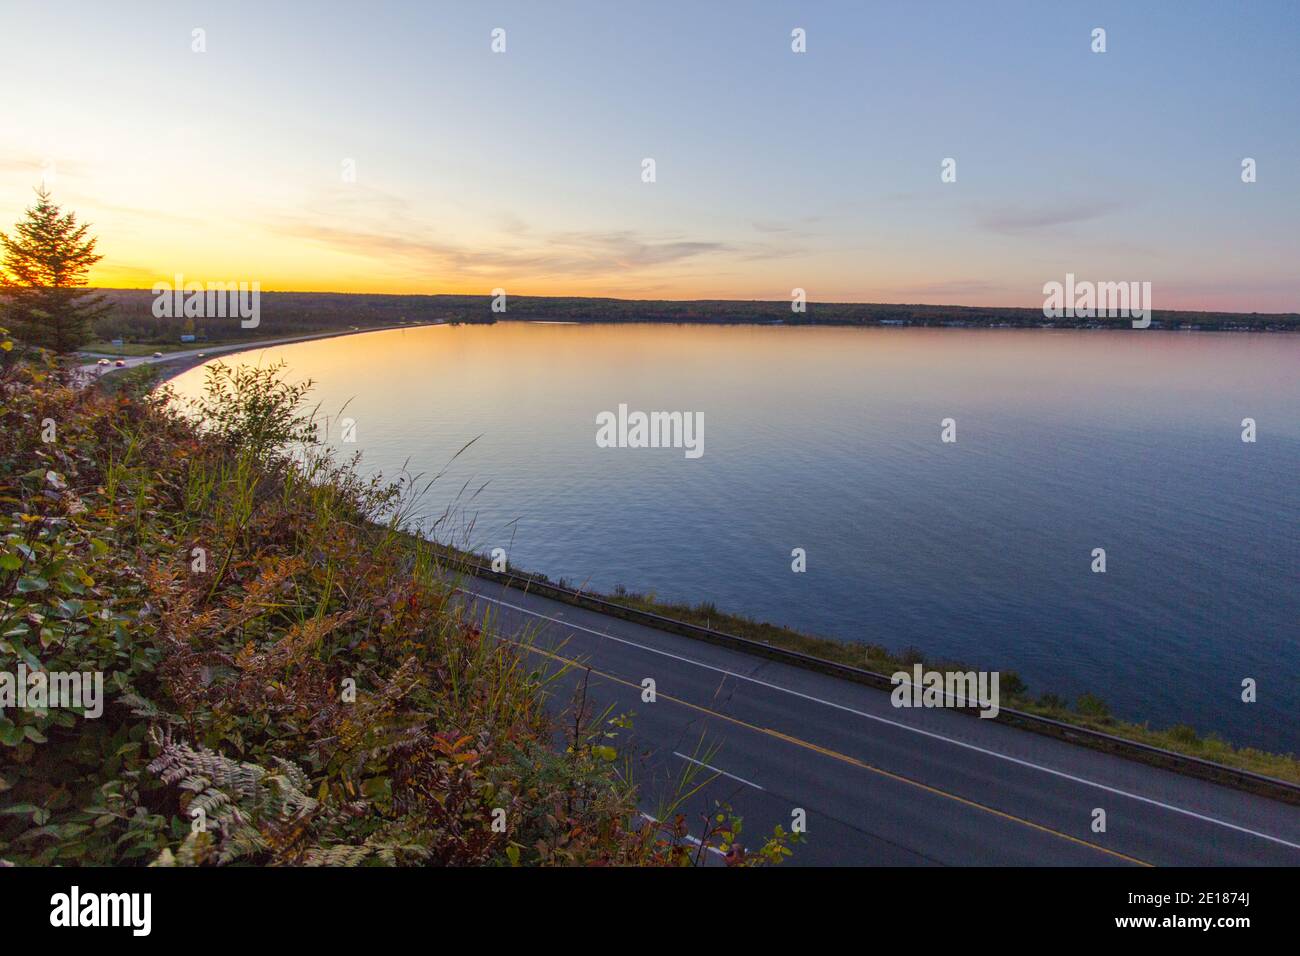 Michigan Scenic Drive. Küstenautobahn entlang der Keweenaw Bay of Lake Superior bei Sonnenuntergang auf der Upper Peninsula of Michigan. Stockfoto